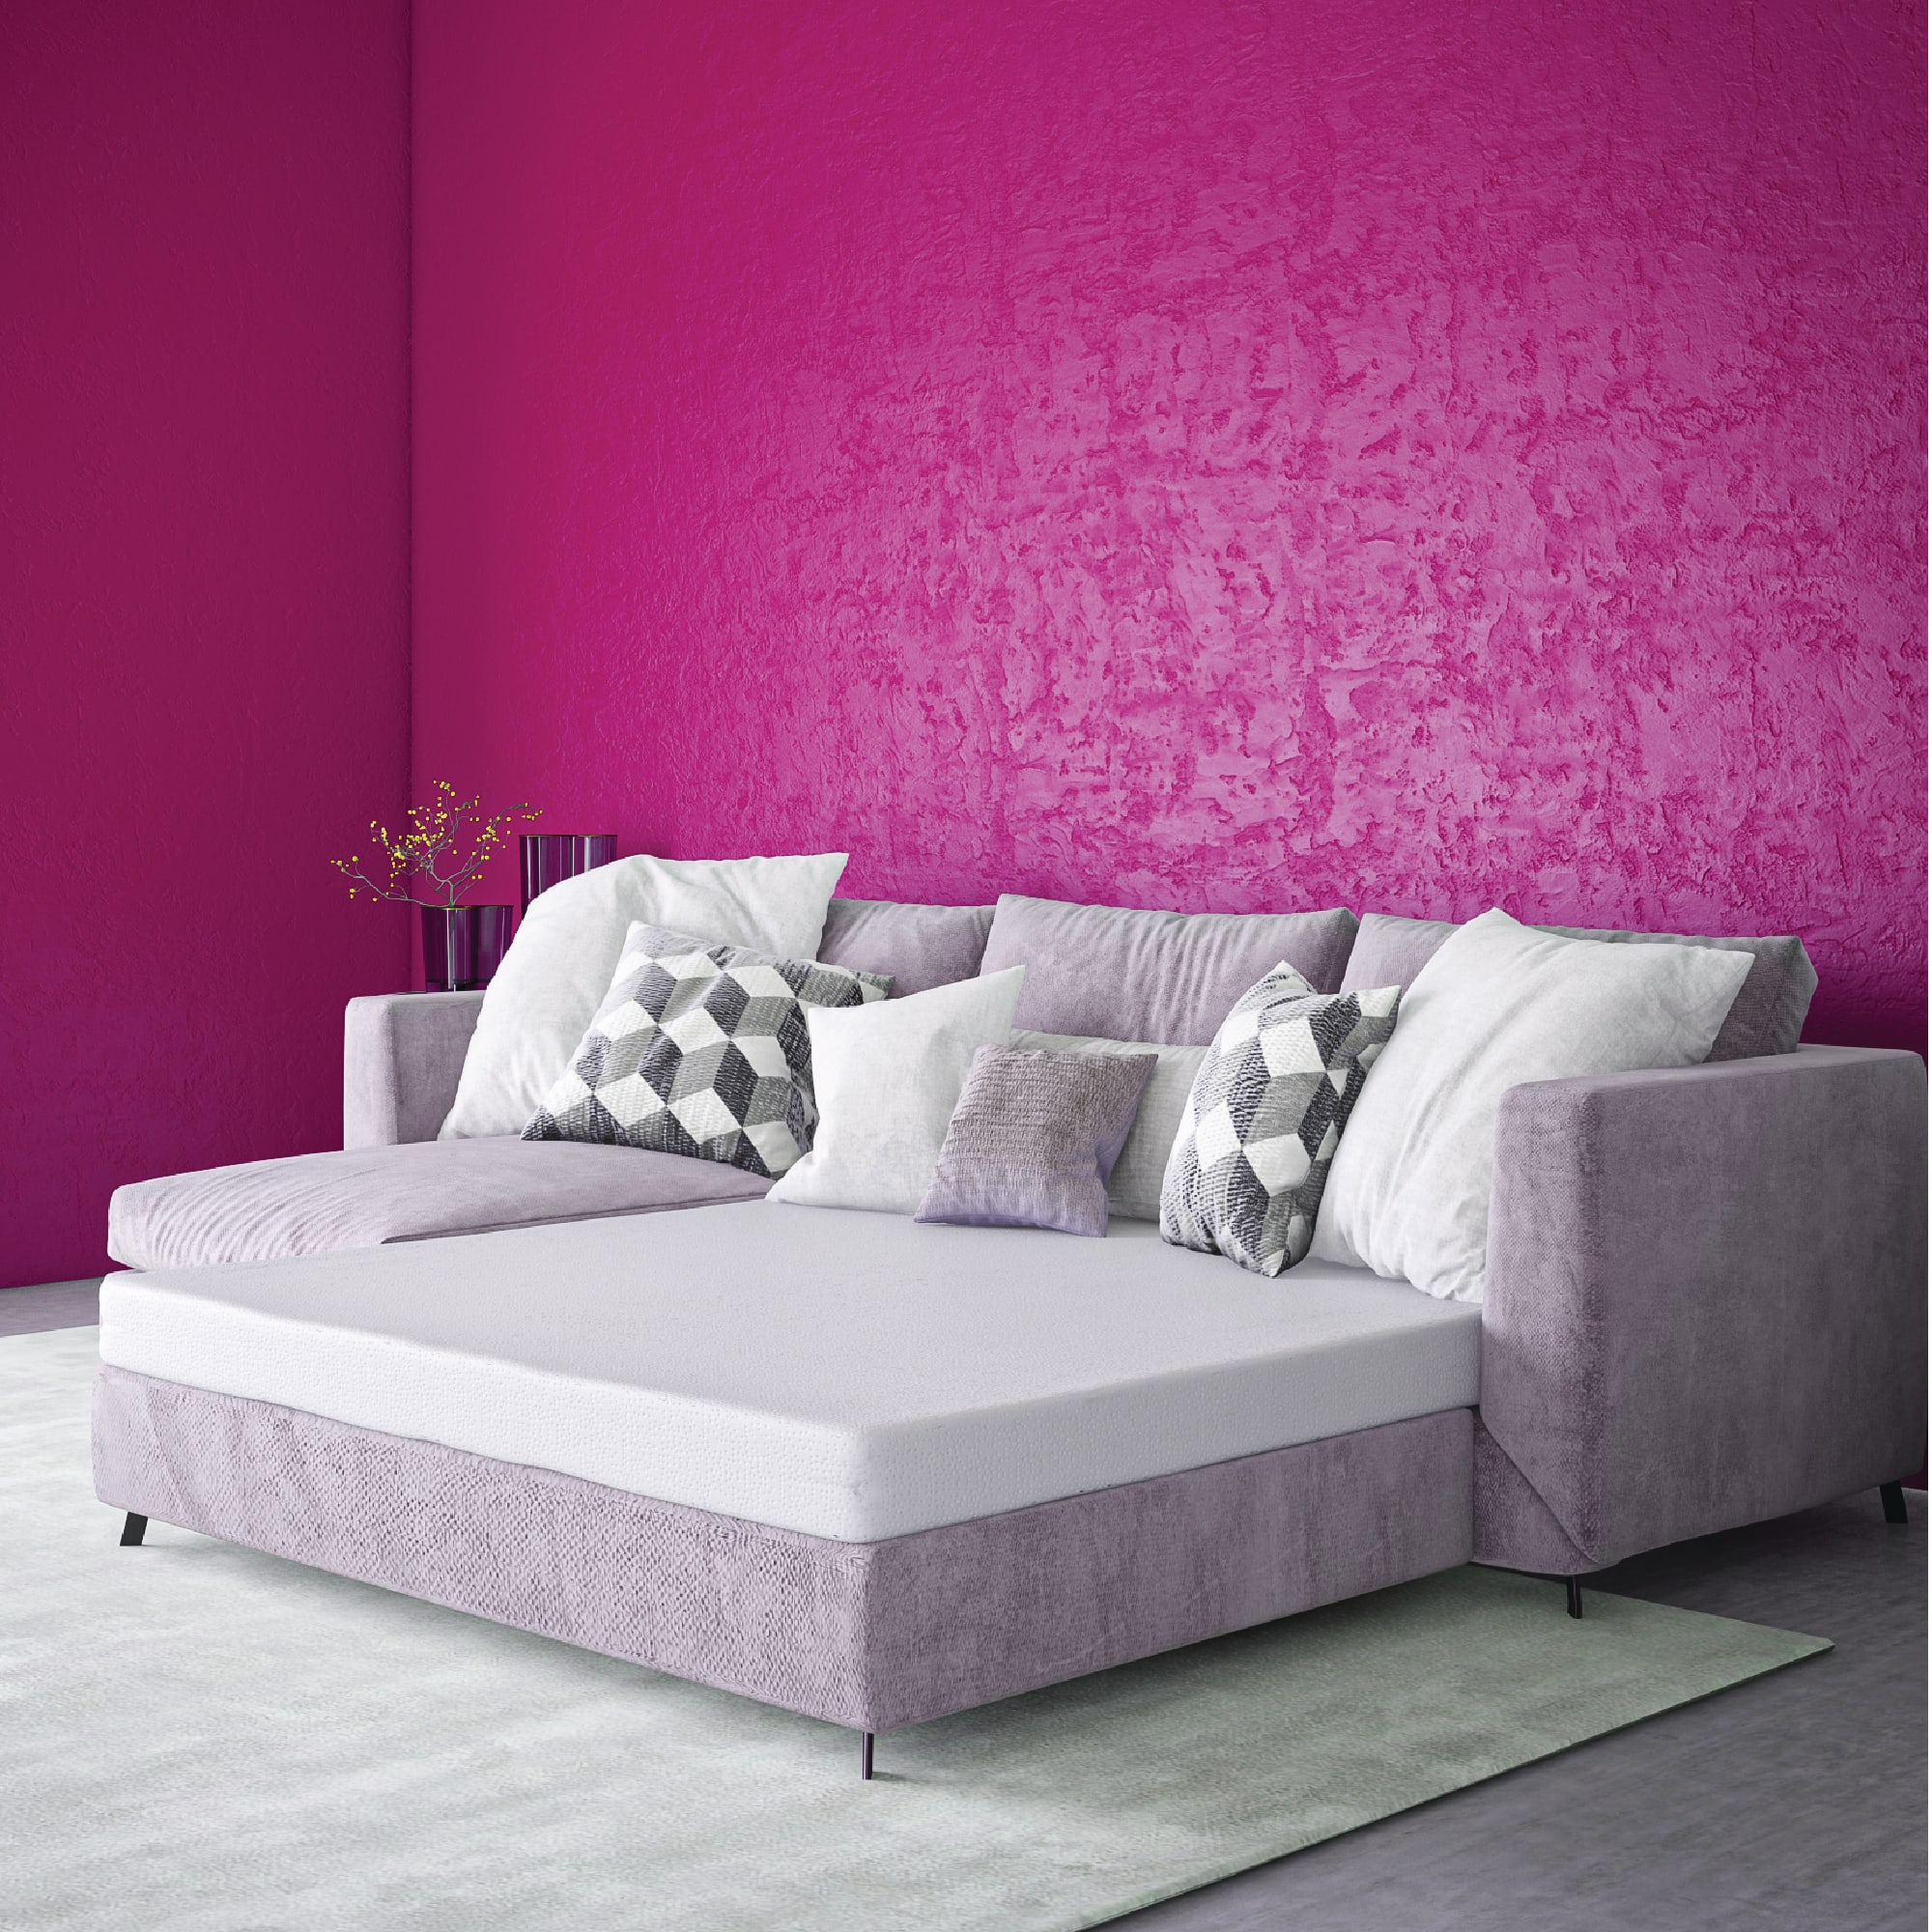 Classic Brands 4-Inch Memory Foam Replacement Sleep Sofa Bed Mattress, Queen - image 3 of 12